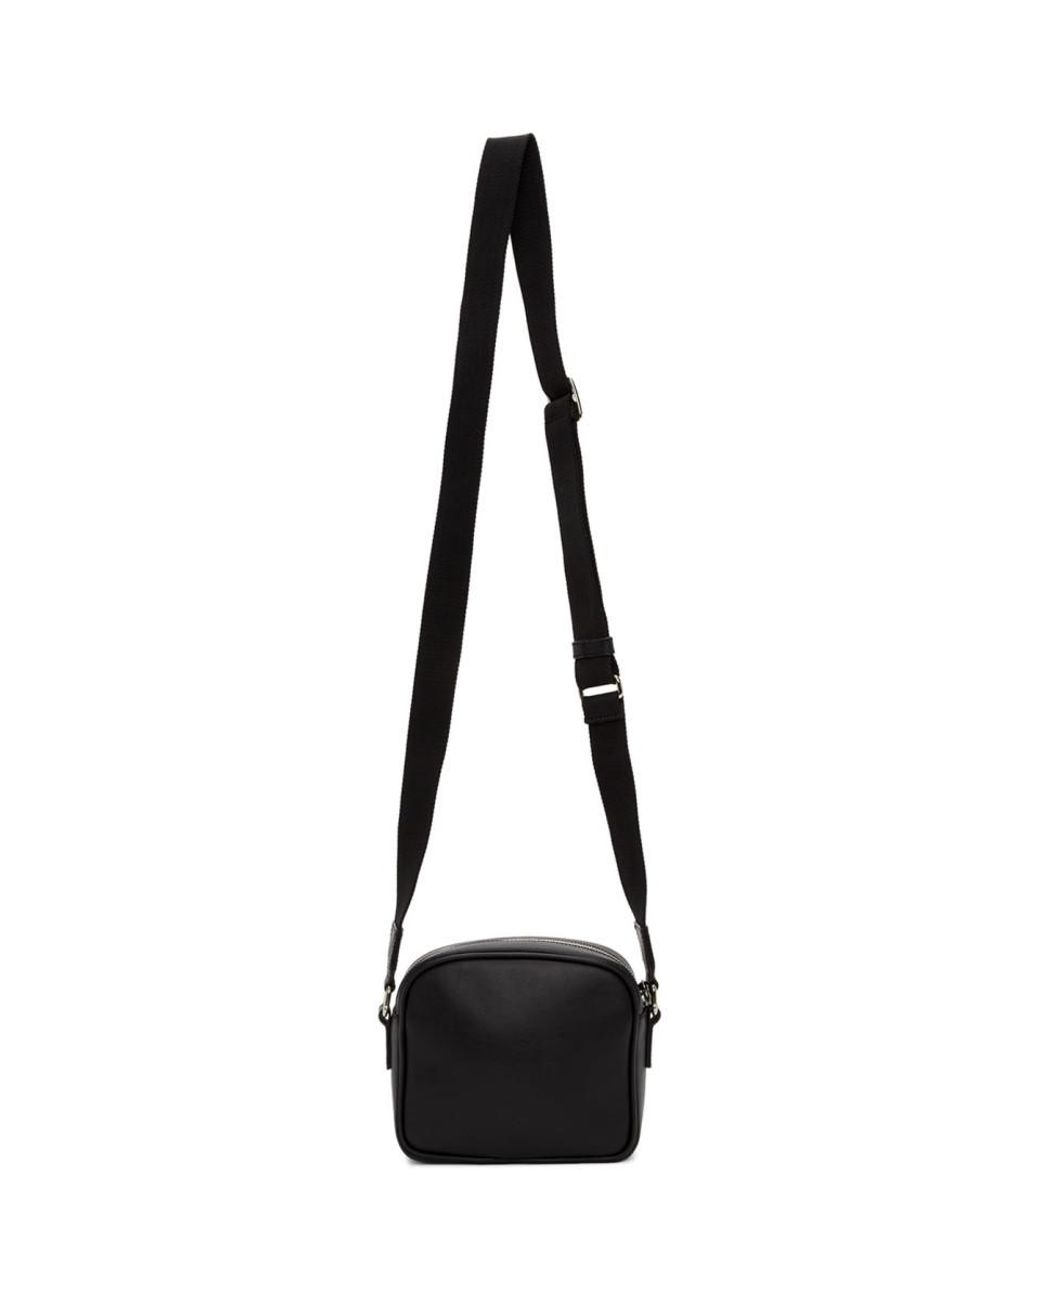 Carhartt women's shoulder bag BLACK I03147089